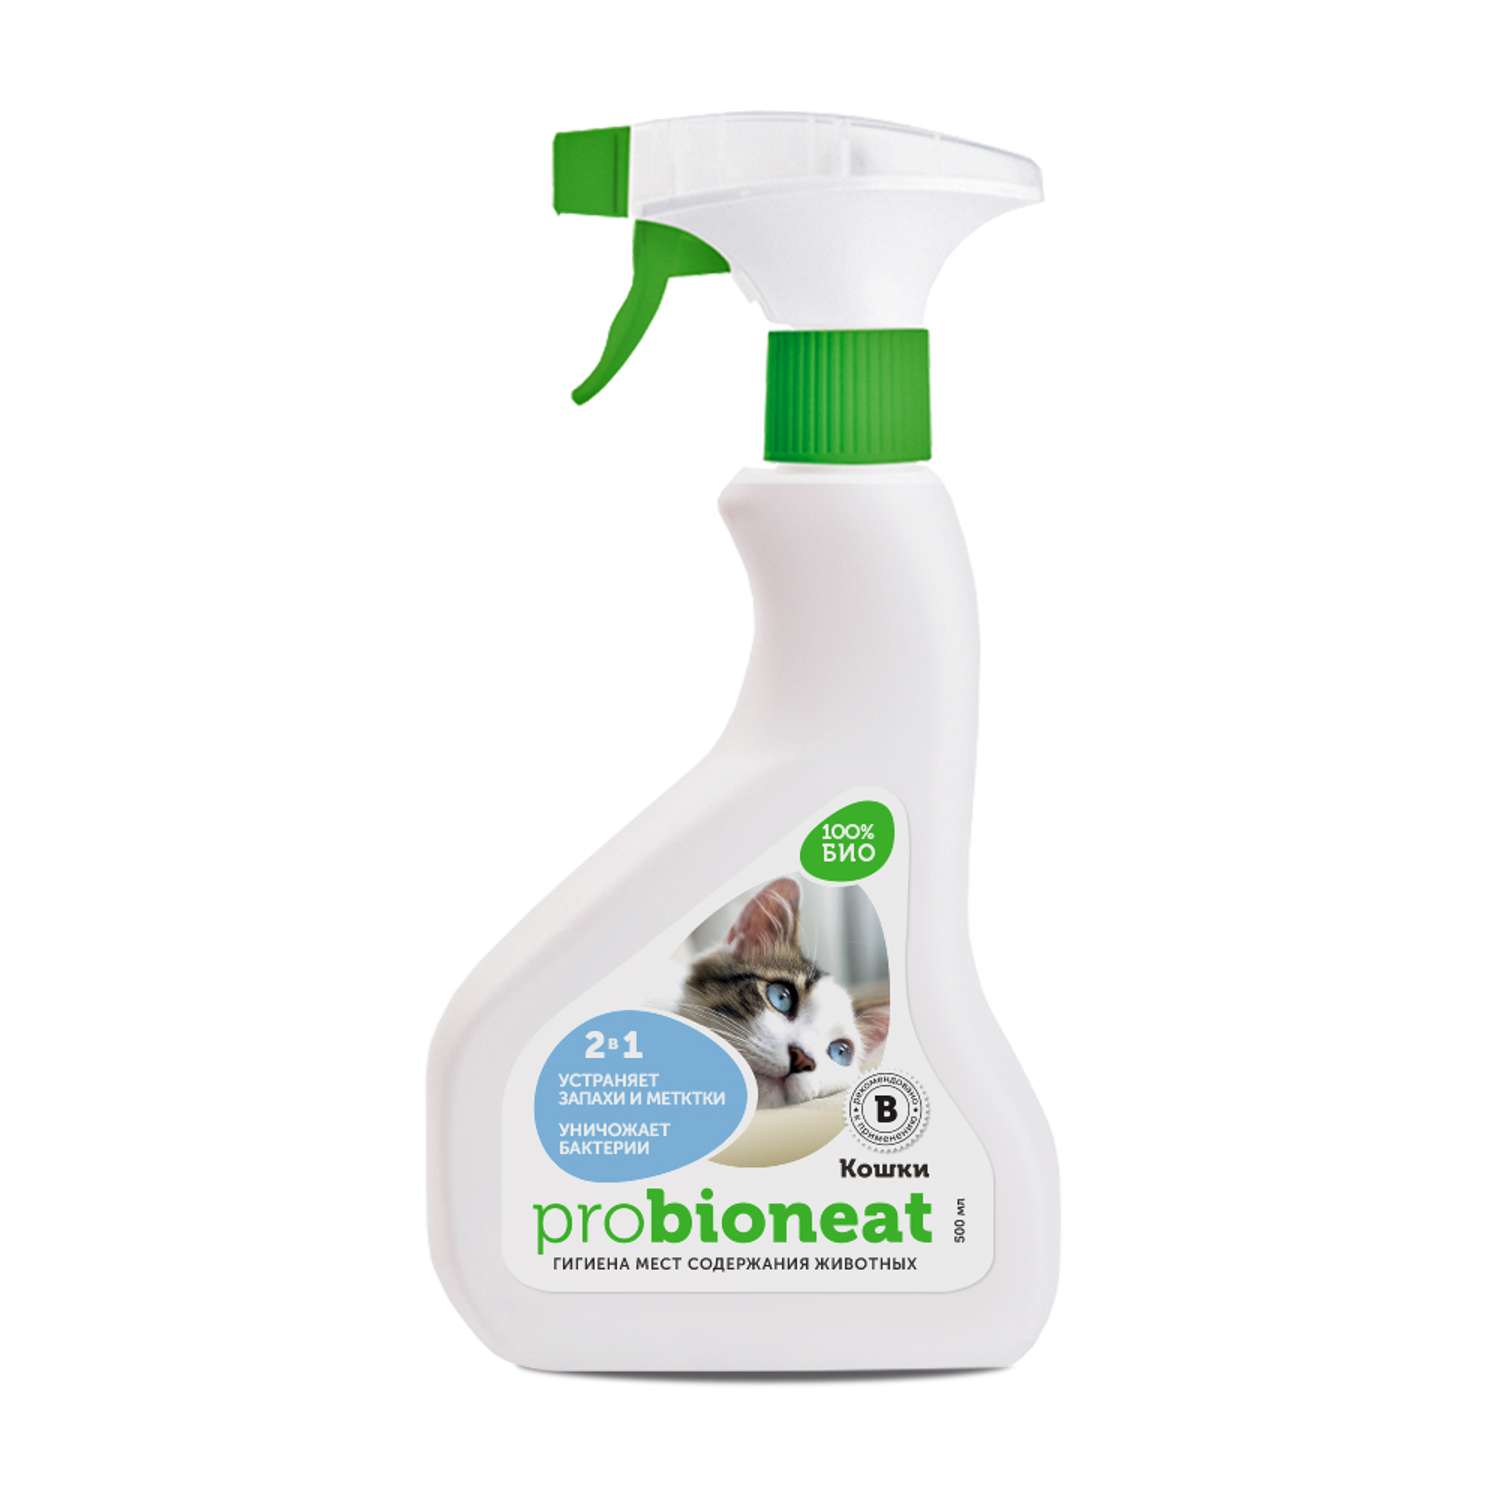 Дезинфицирующее средство Bioneat для обработки и устранения запахов Кошки 500 мл - фото 1